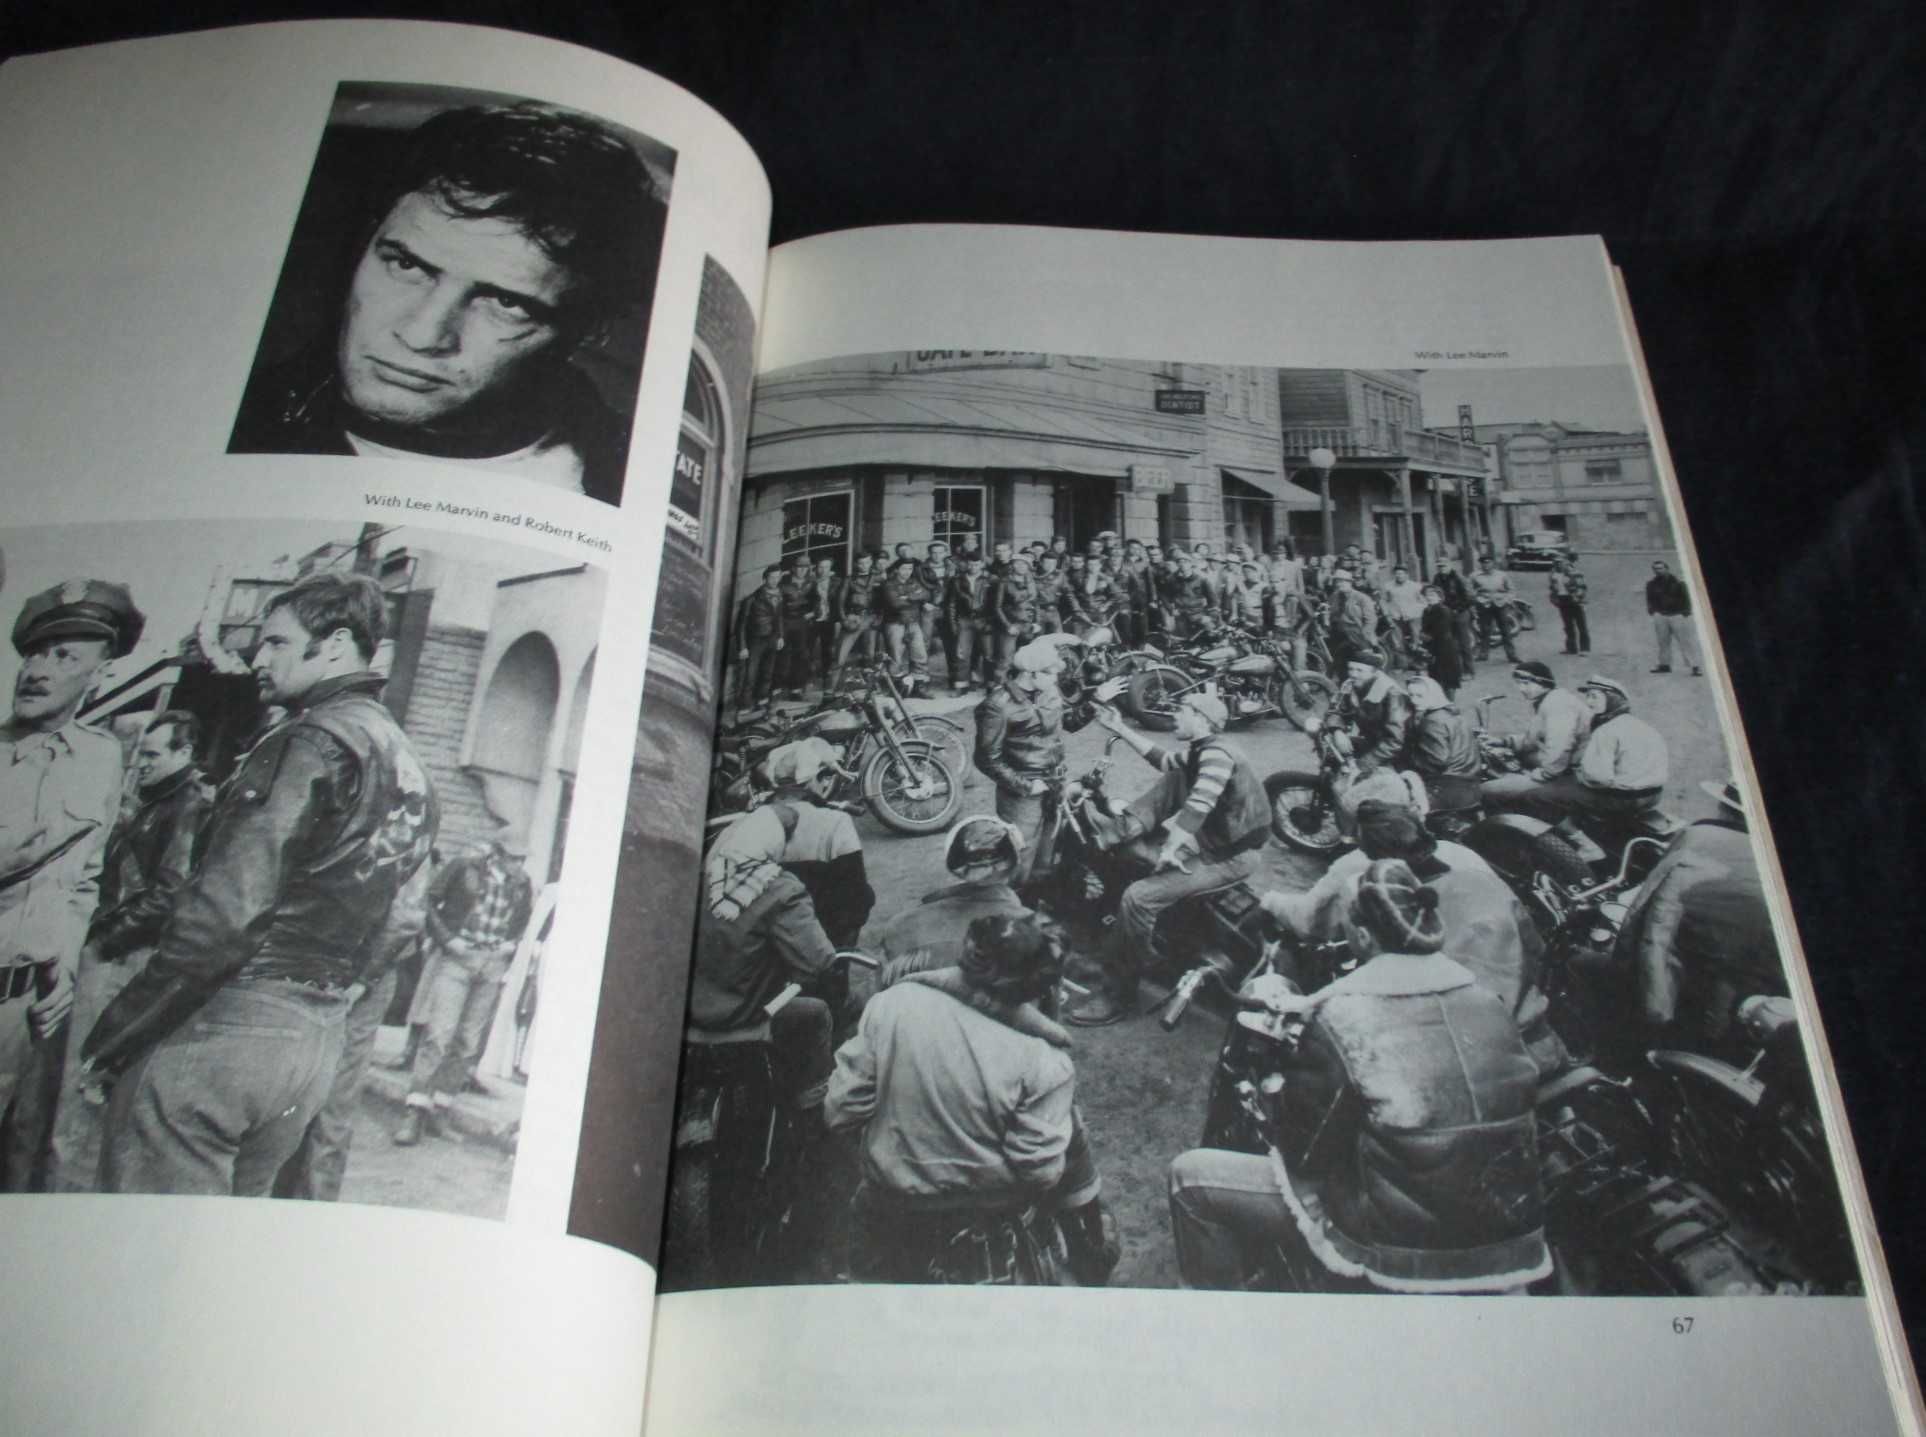 Livro The Films of Marlon Brando Tony Thomas